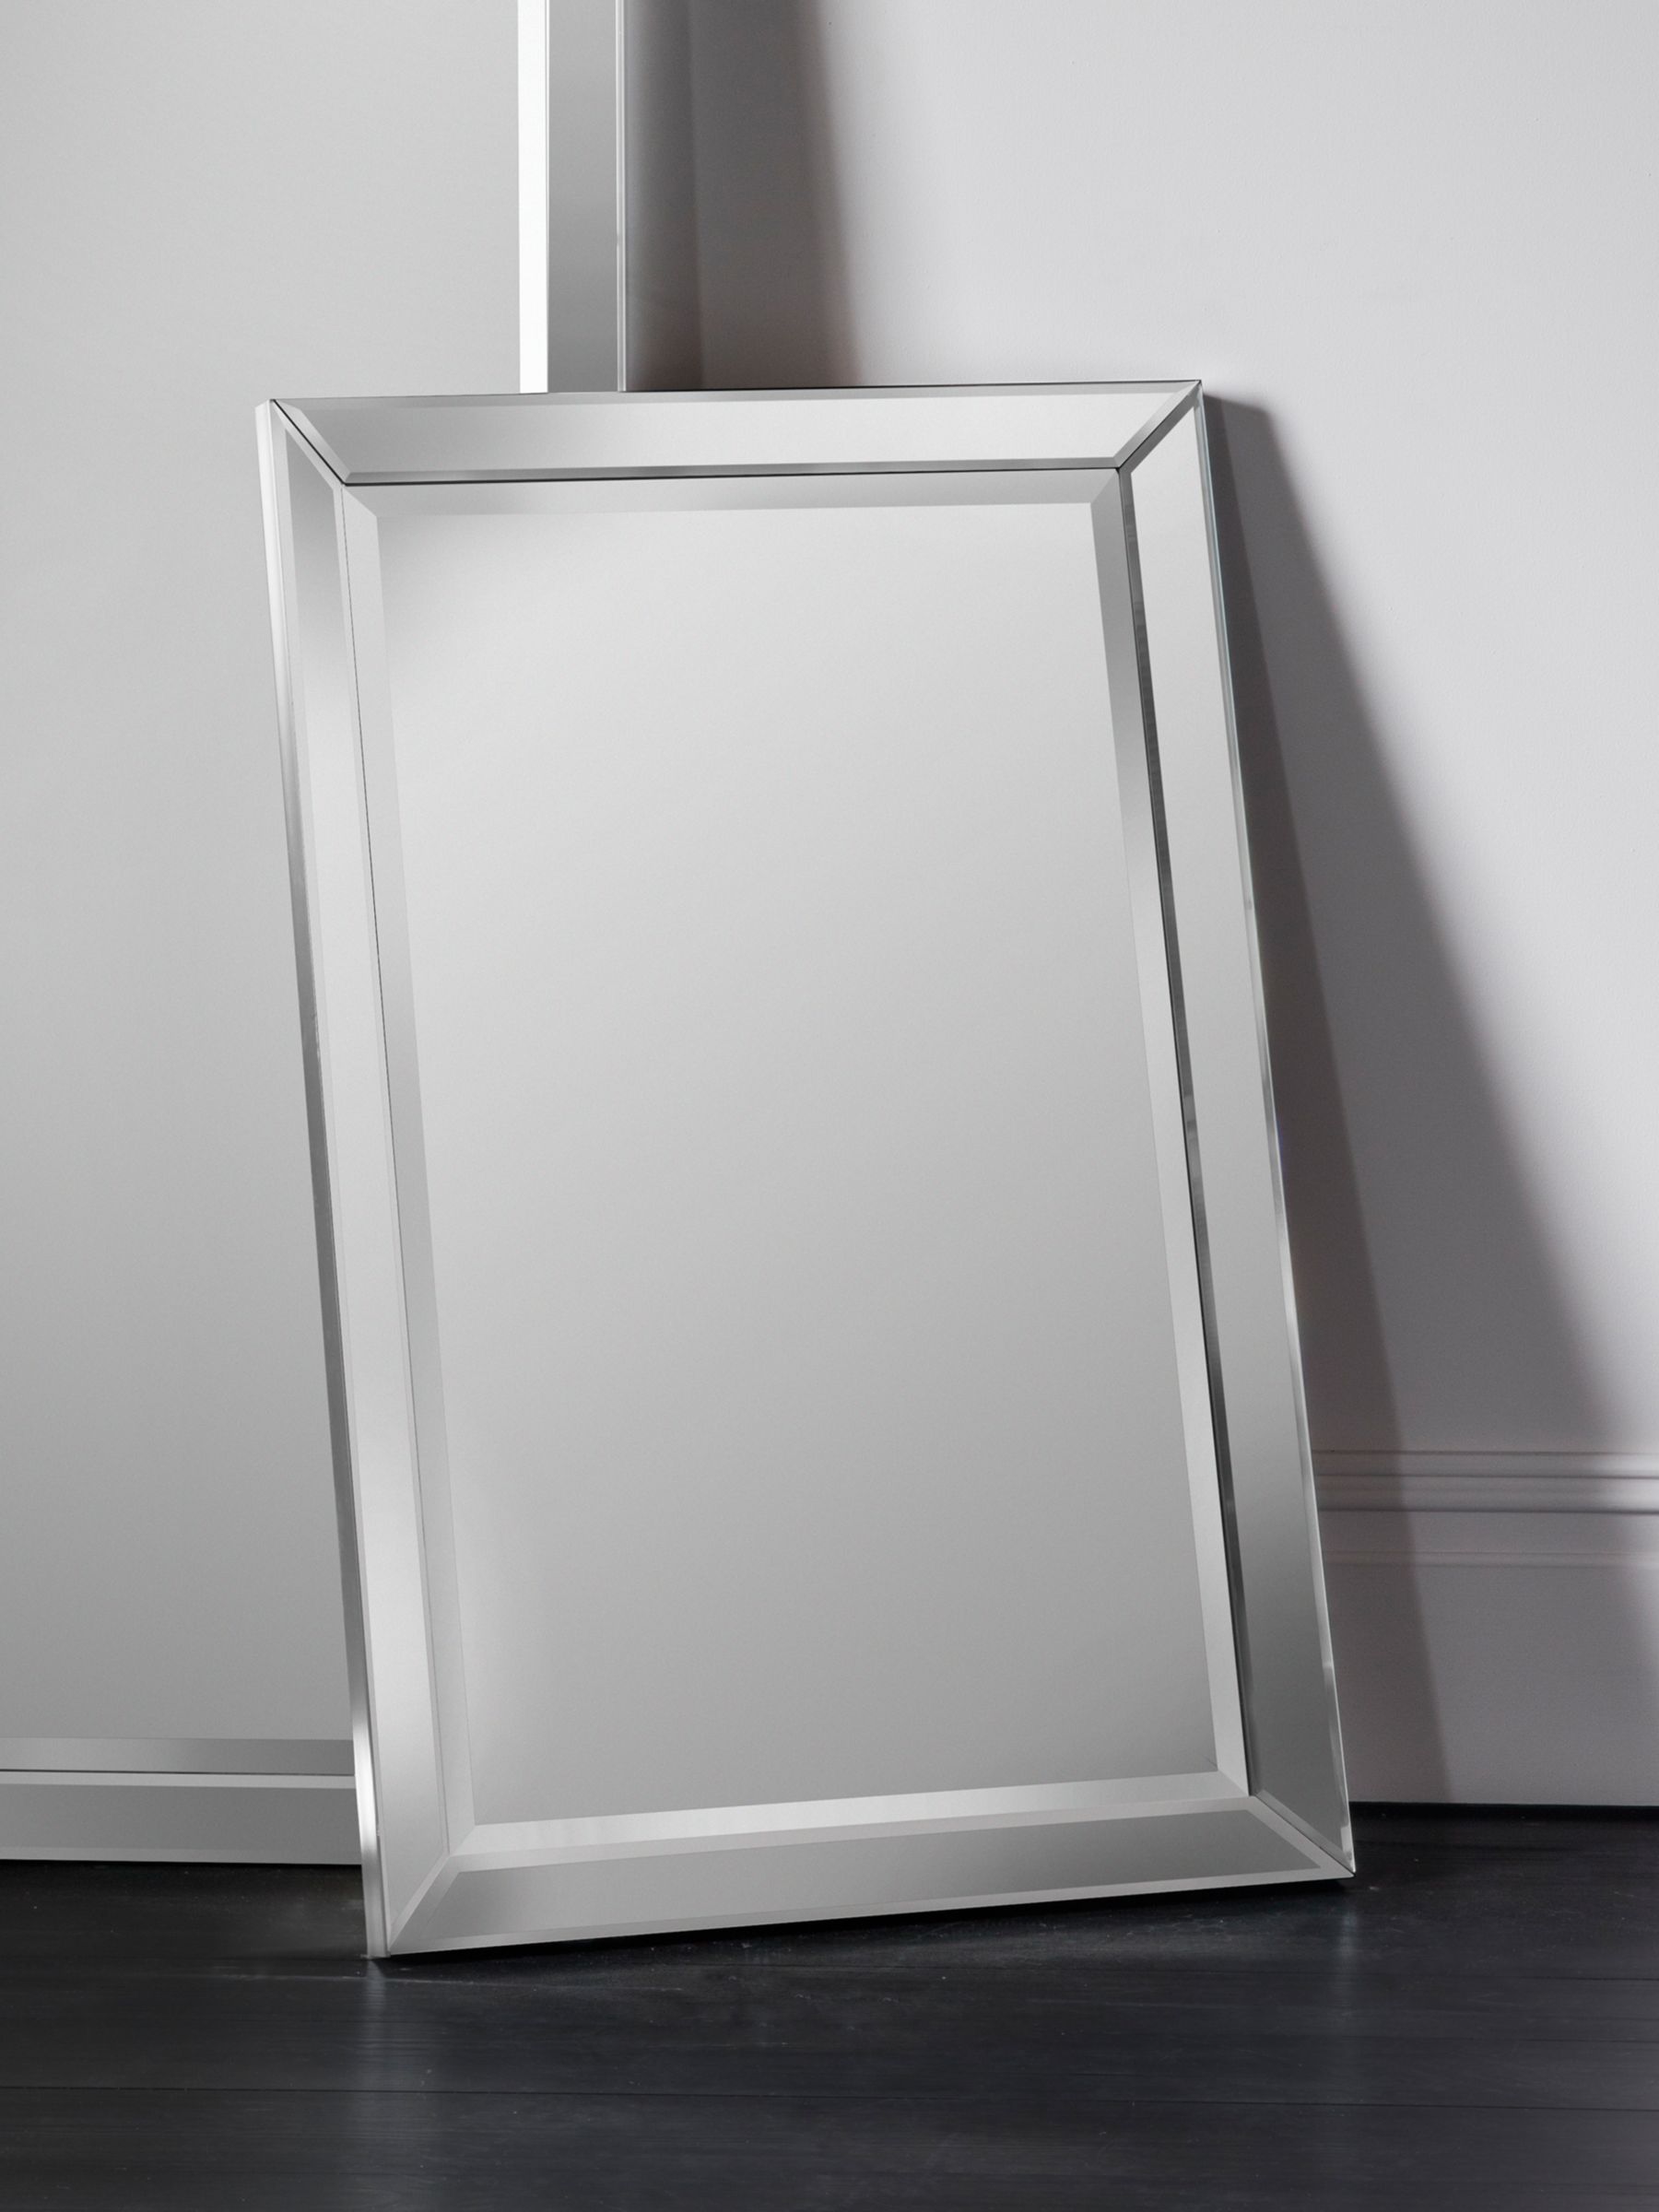 Gallery Direct Luna Rectangular Glass Frame Wall Mirror, Clear, 91.5 x 61cm